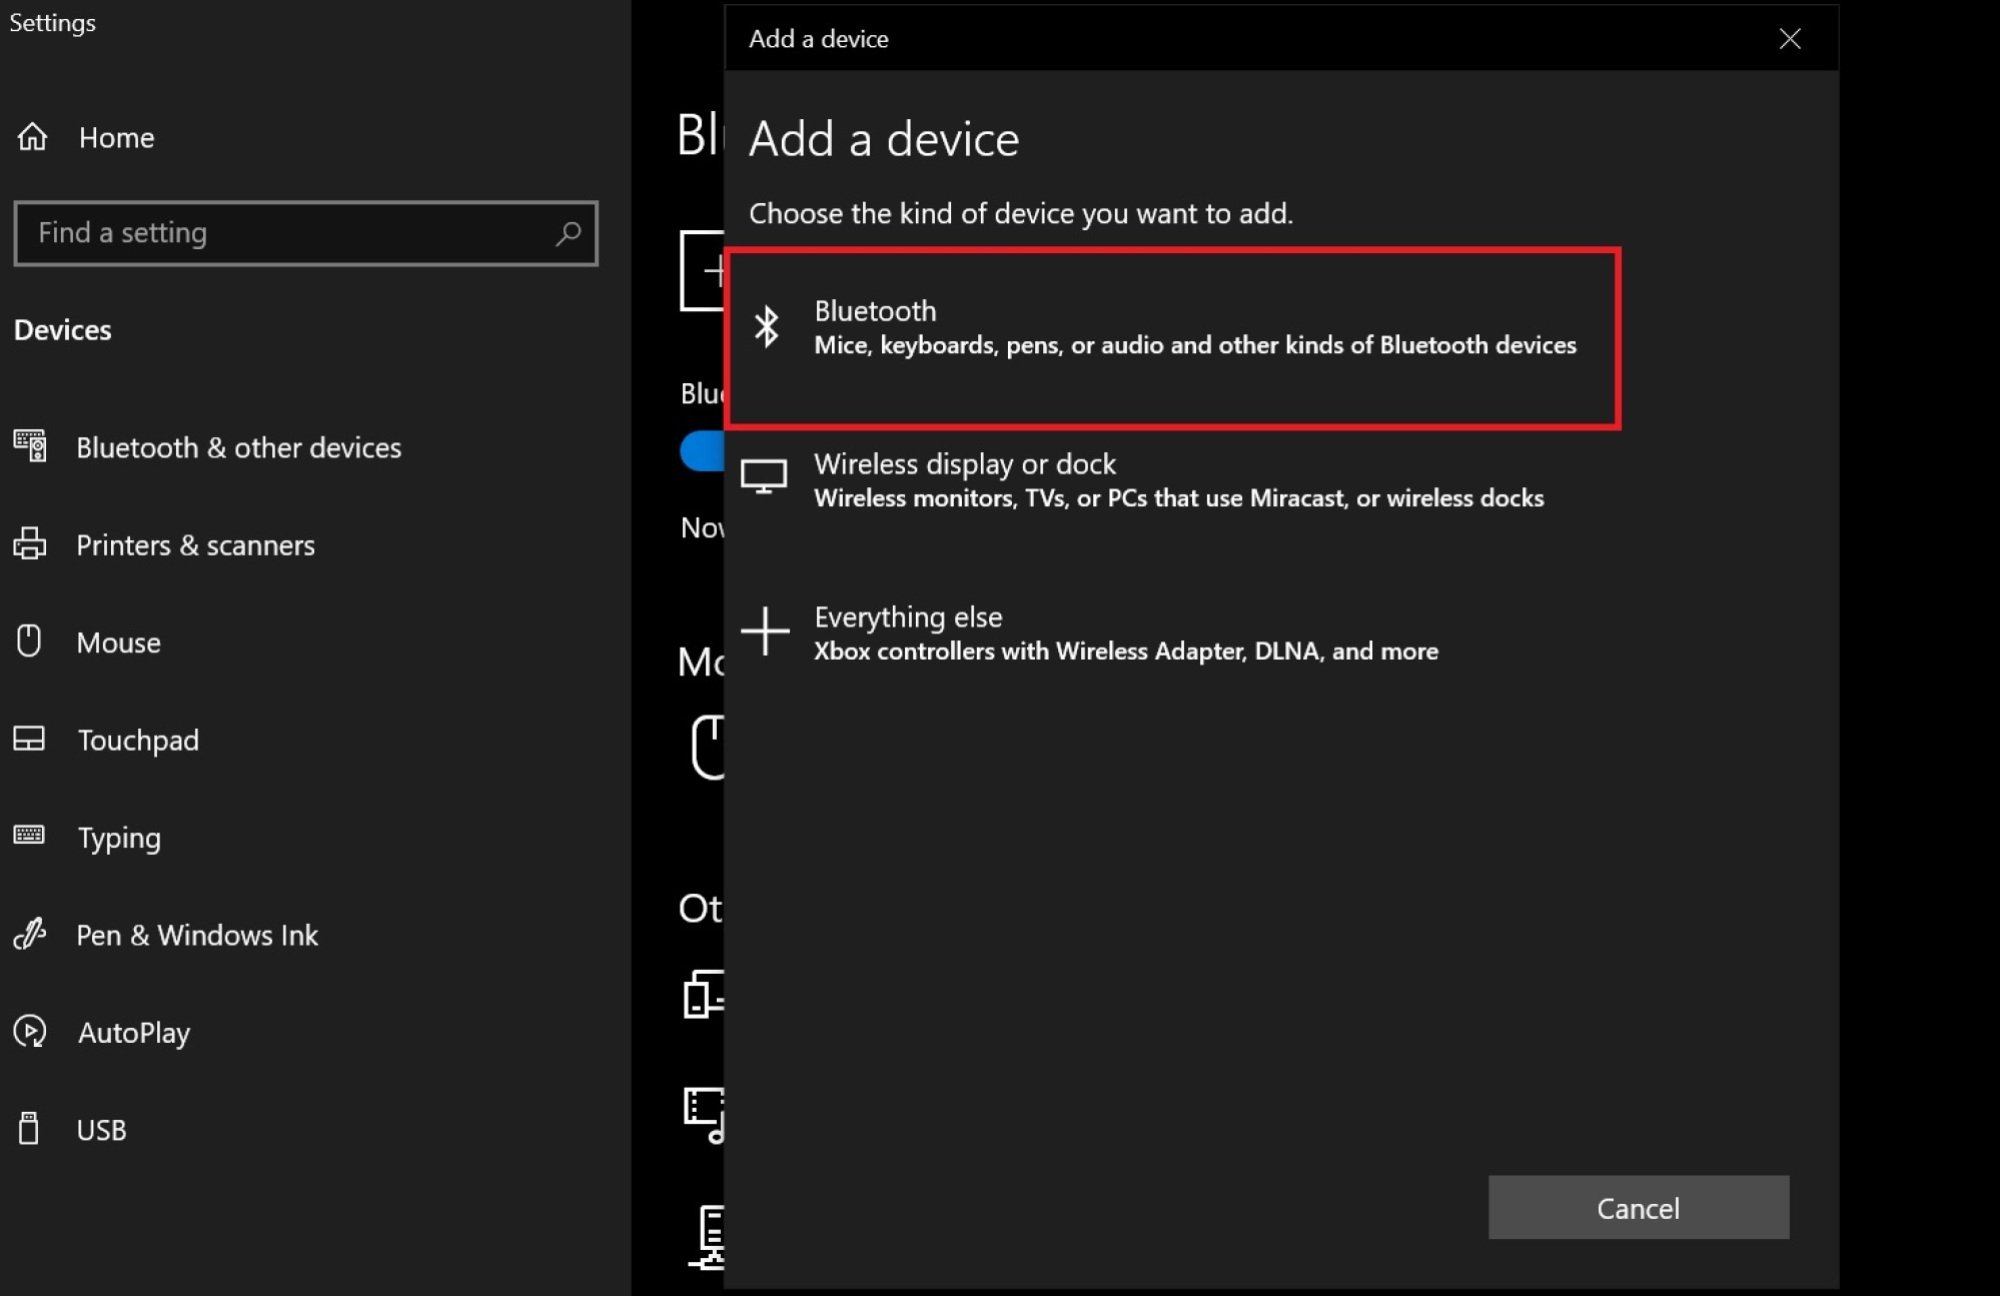 Add a device settings on a Windows PC